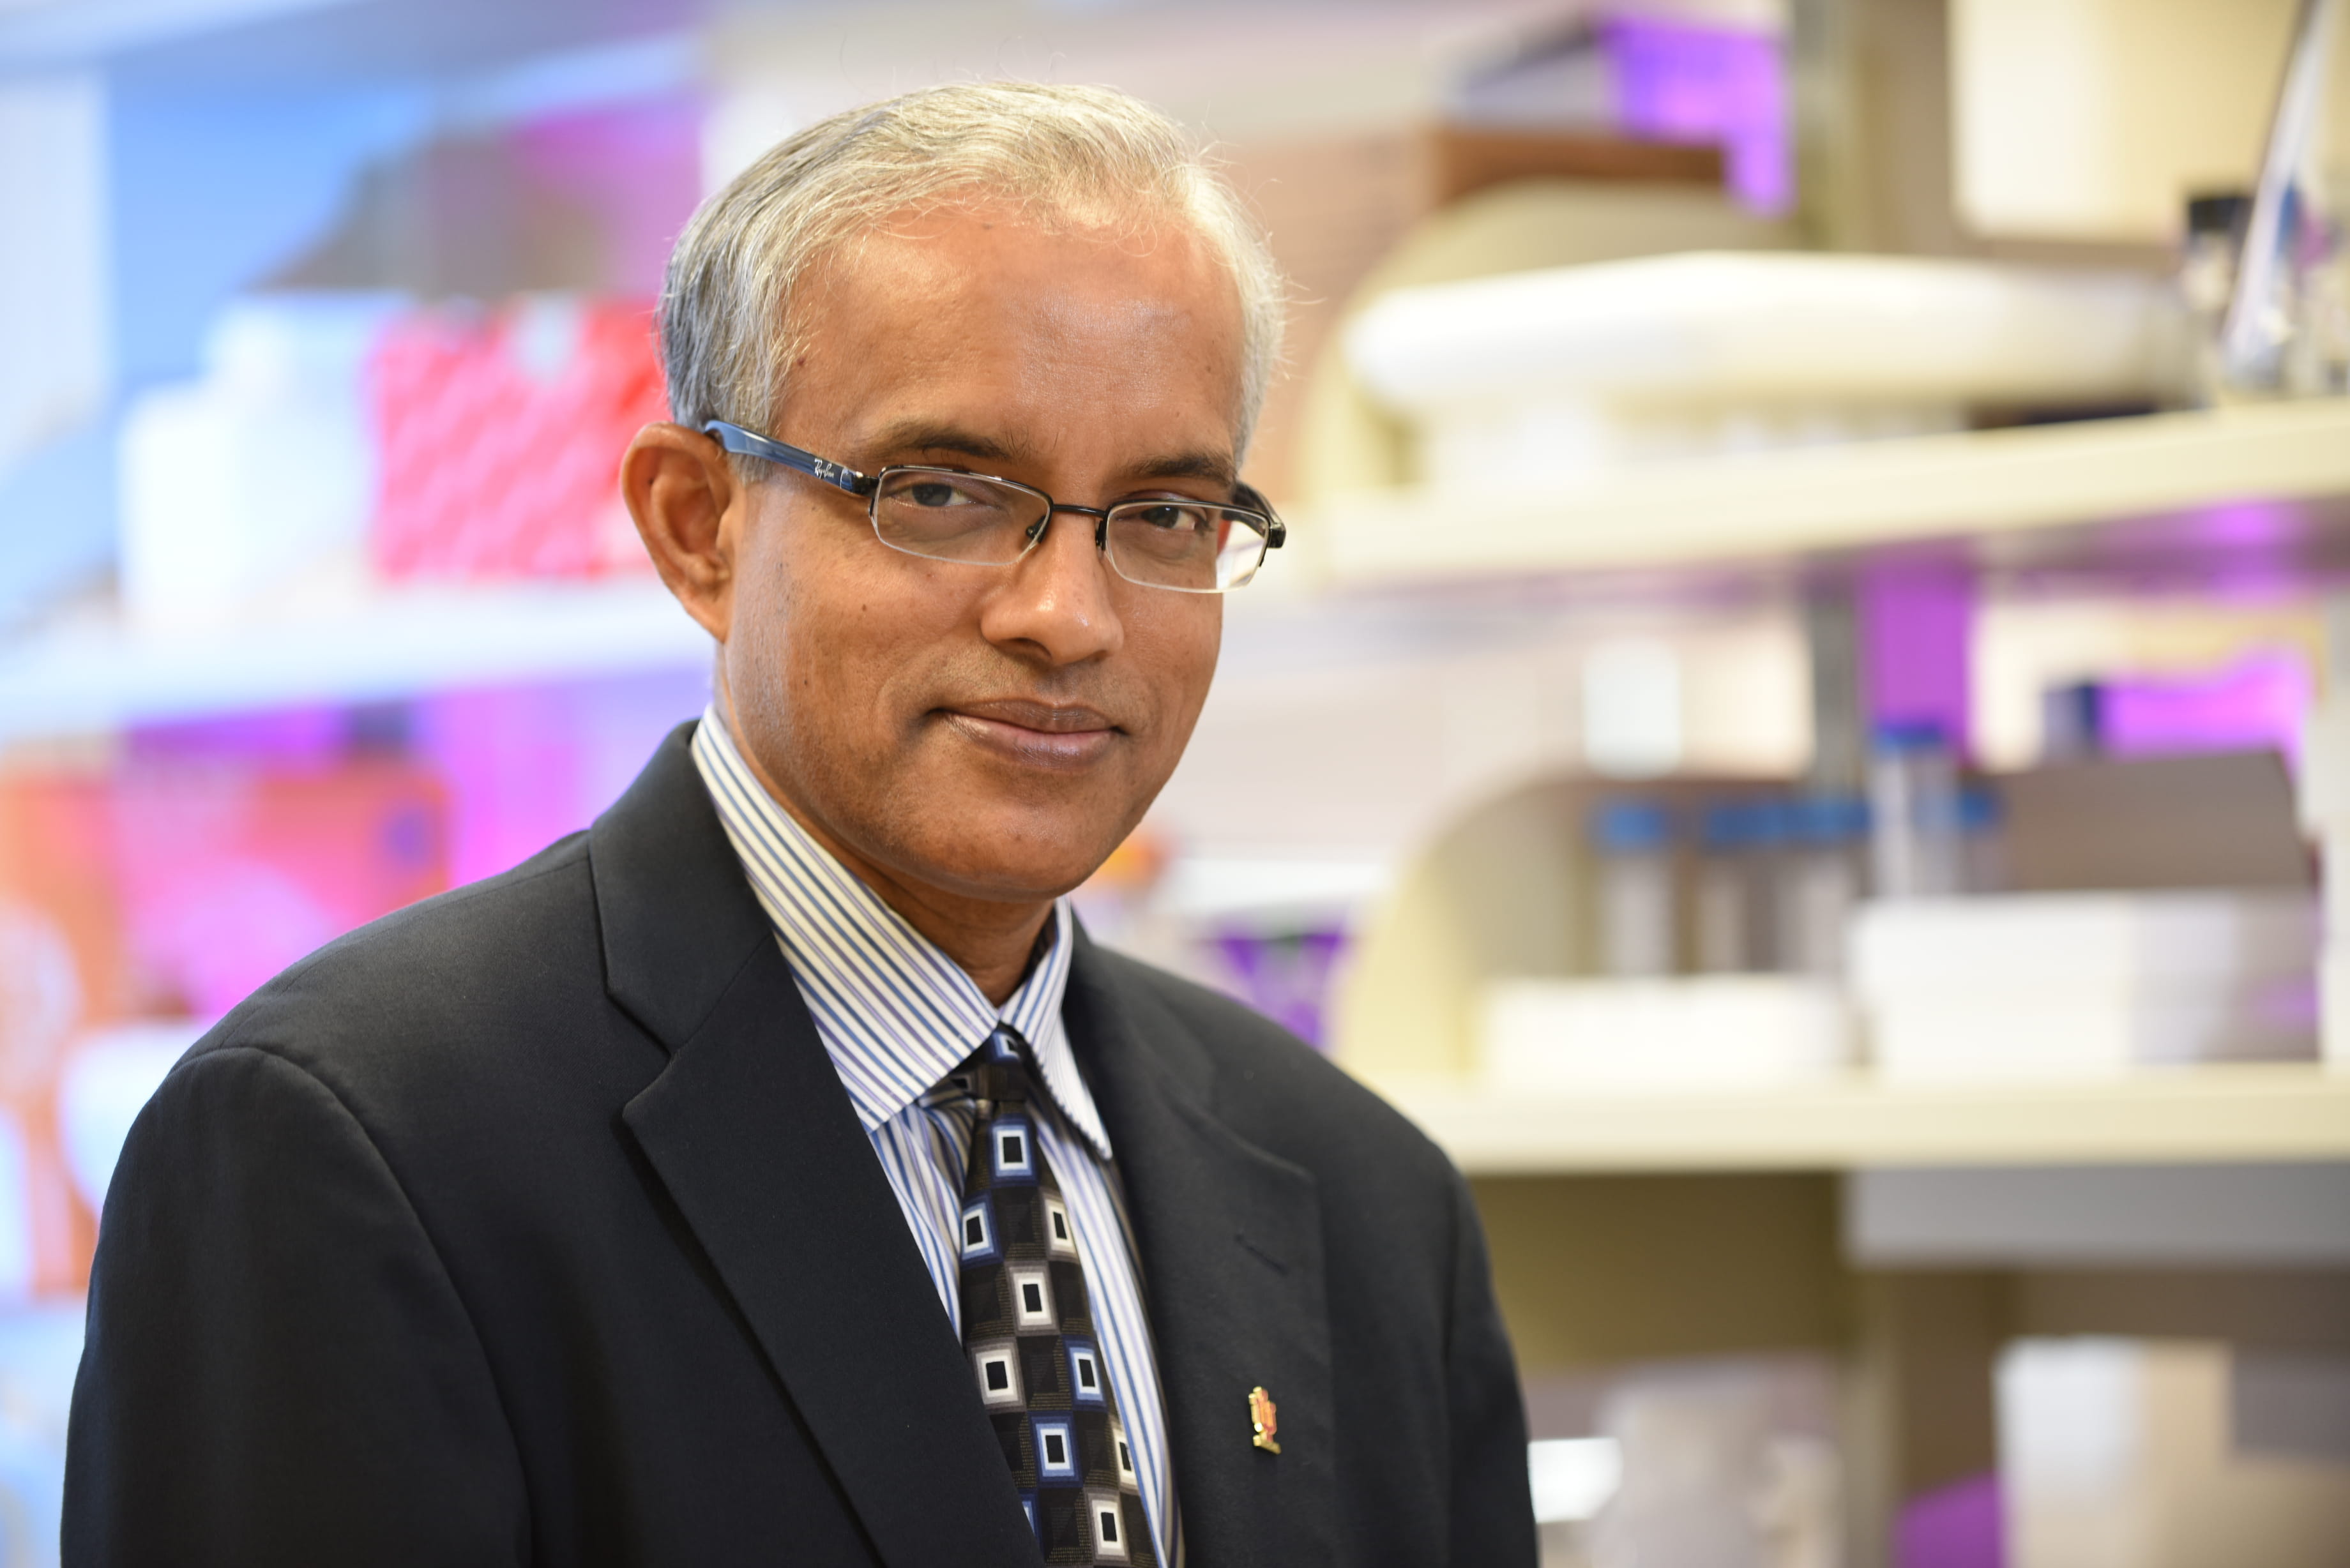 Harikrishna Nakshatri, B.V.Sc., Ph.D., of the Indiana University Melvin and Bren Simon Comprehensive Cancer Center